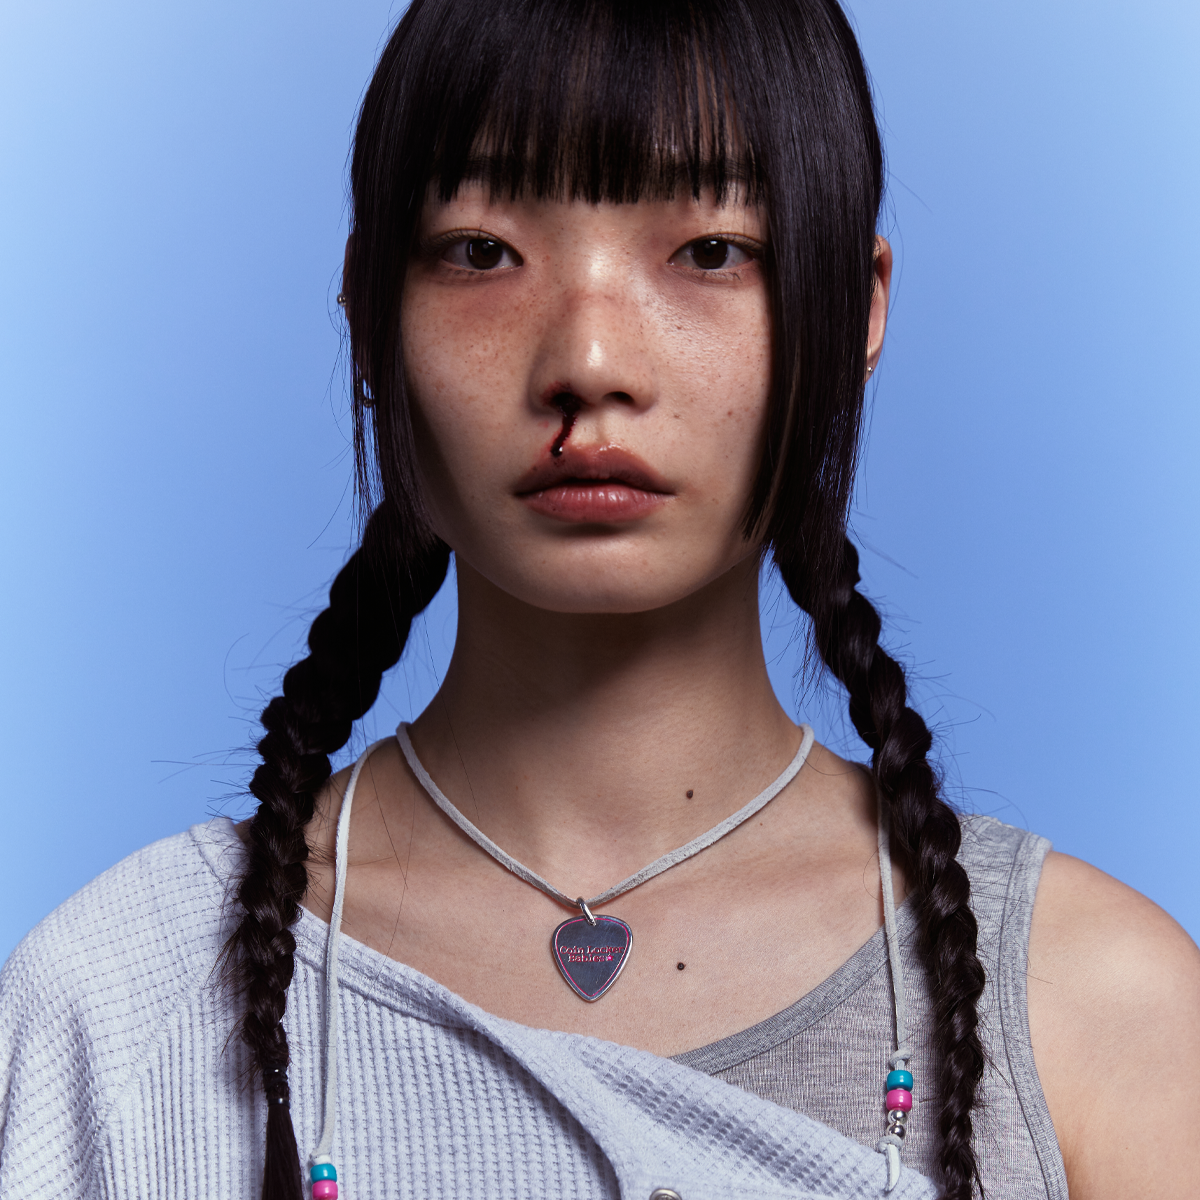 Anemone necklace